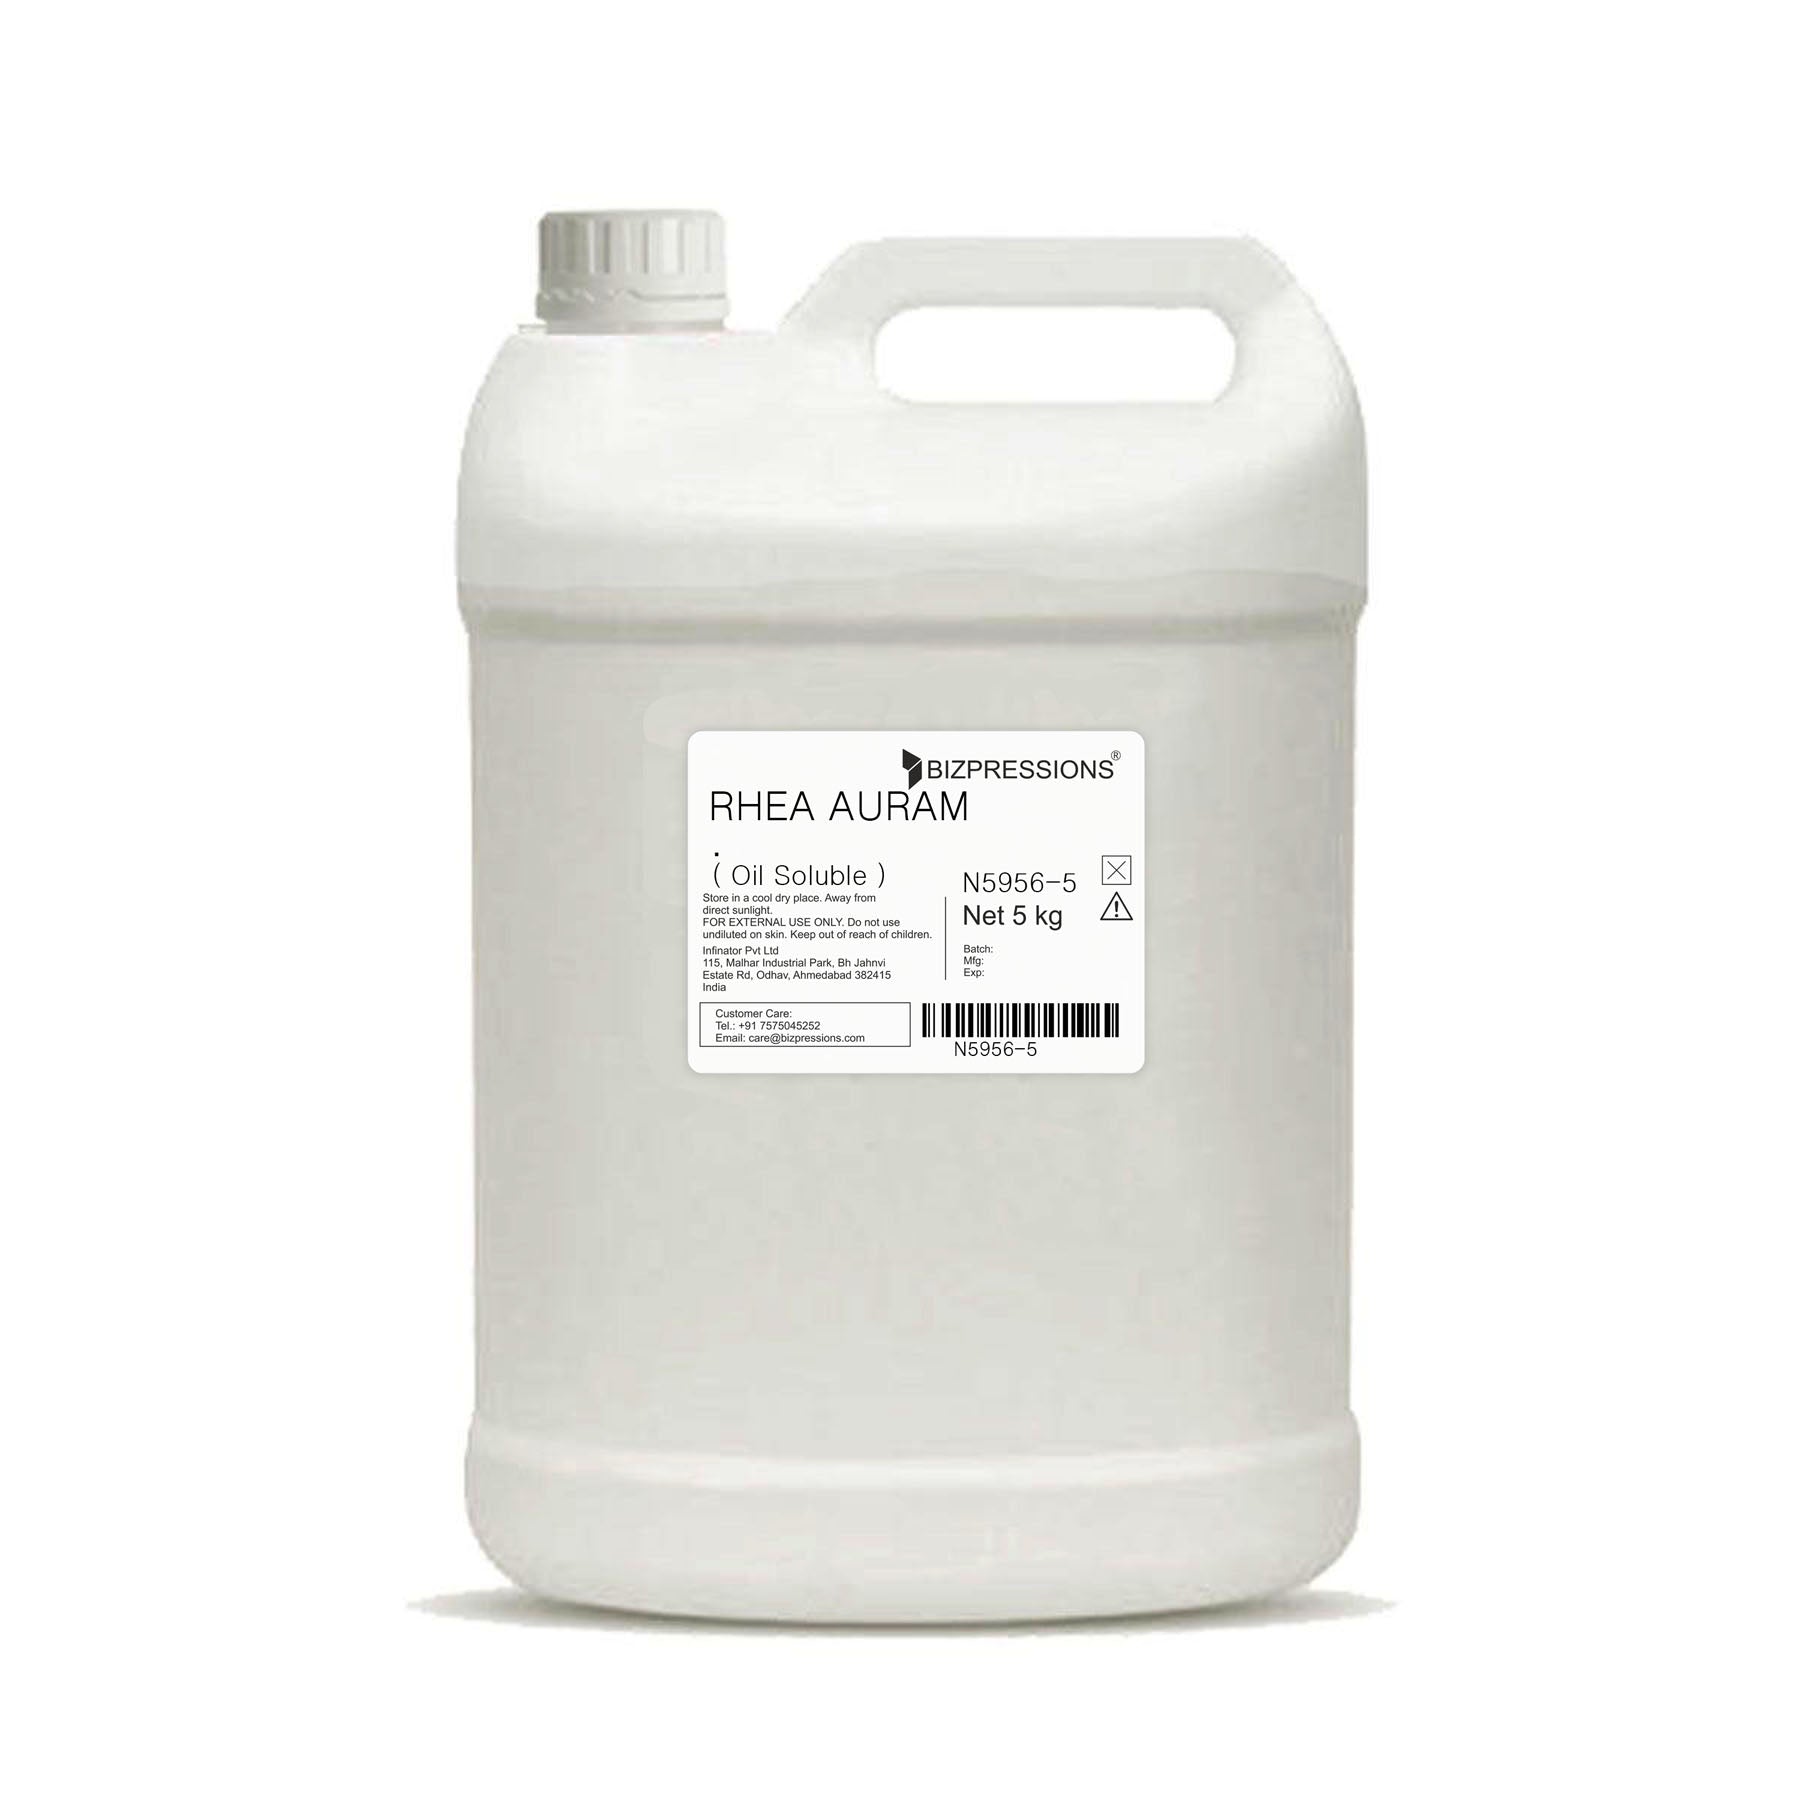 RHEA AURAM - Fragrance ( Oil Soluble ) - 5 kg